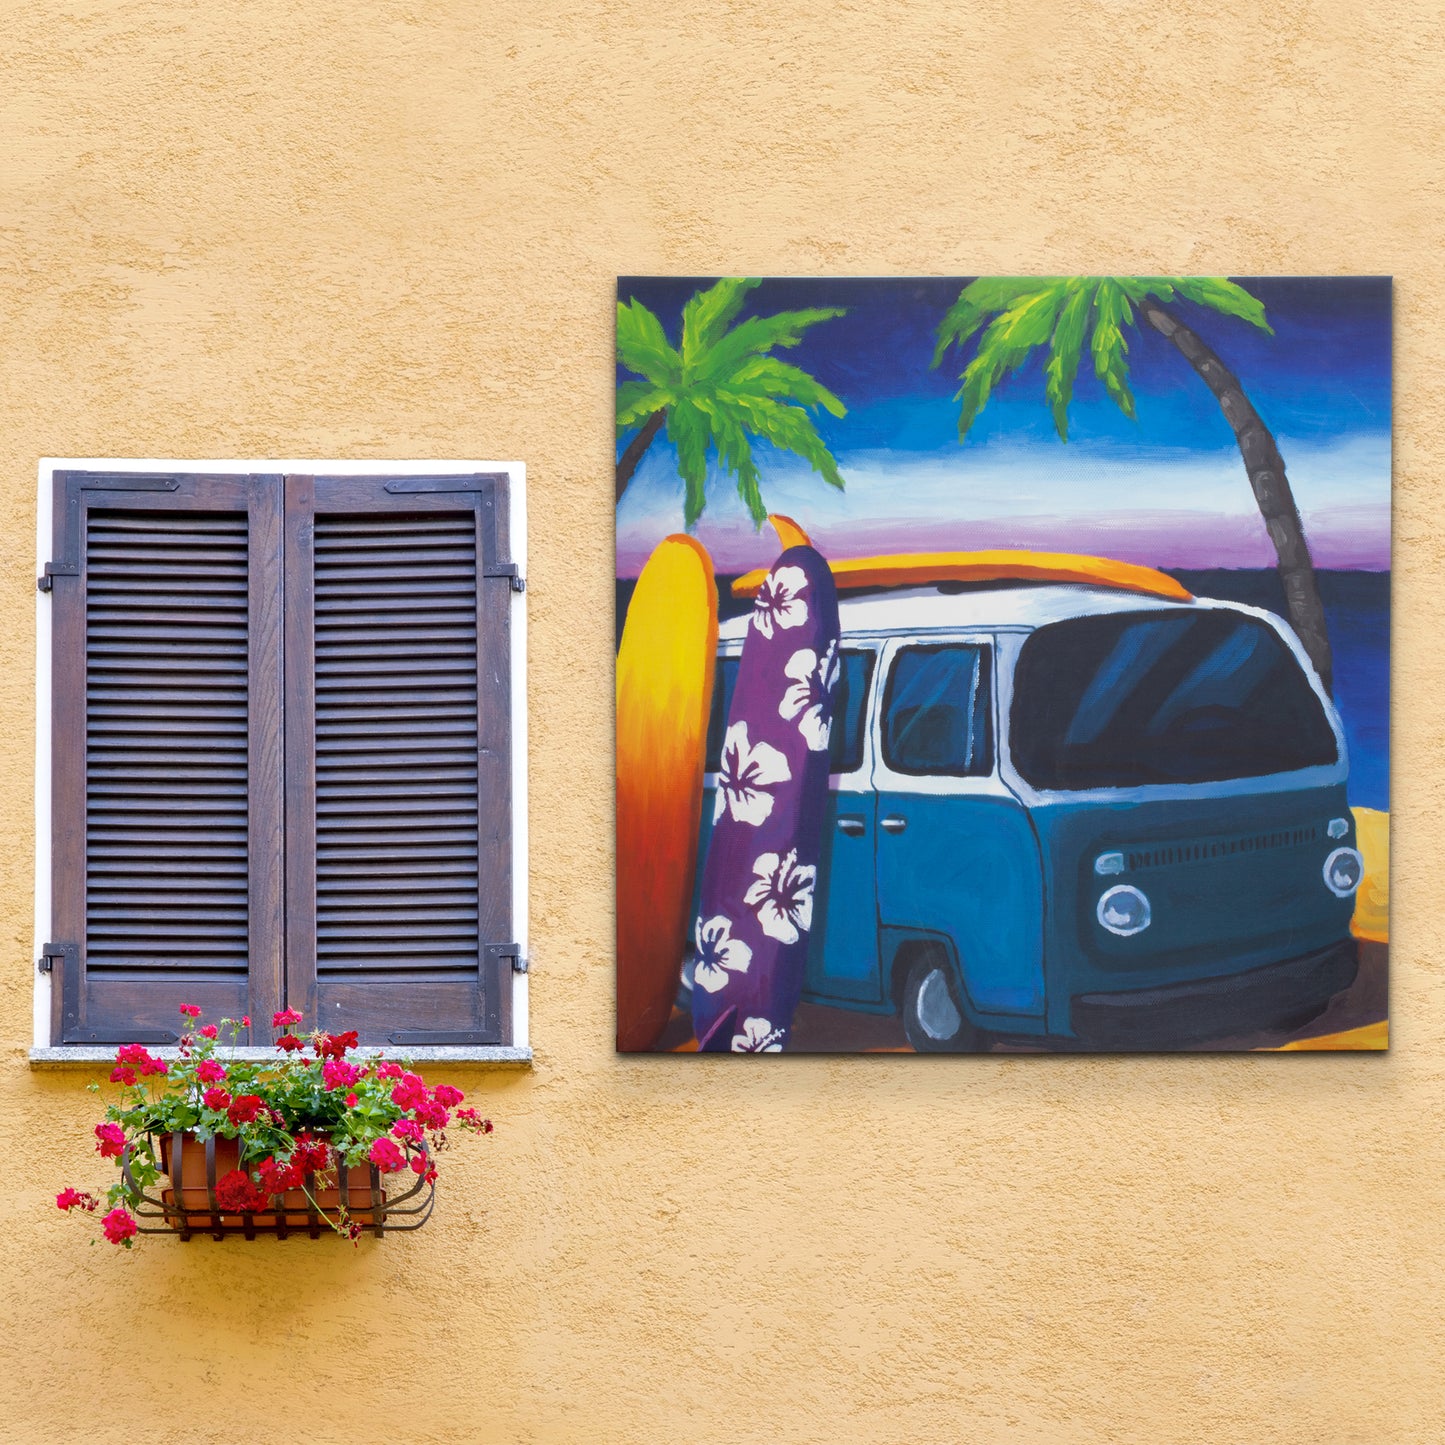 Surf Mini Bus Outdoor Canvas Art Print - 35x35